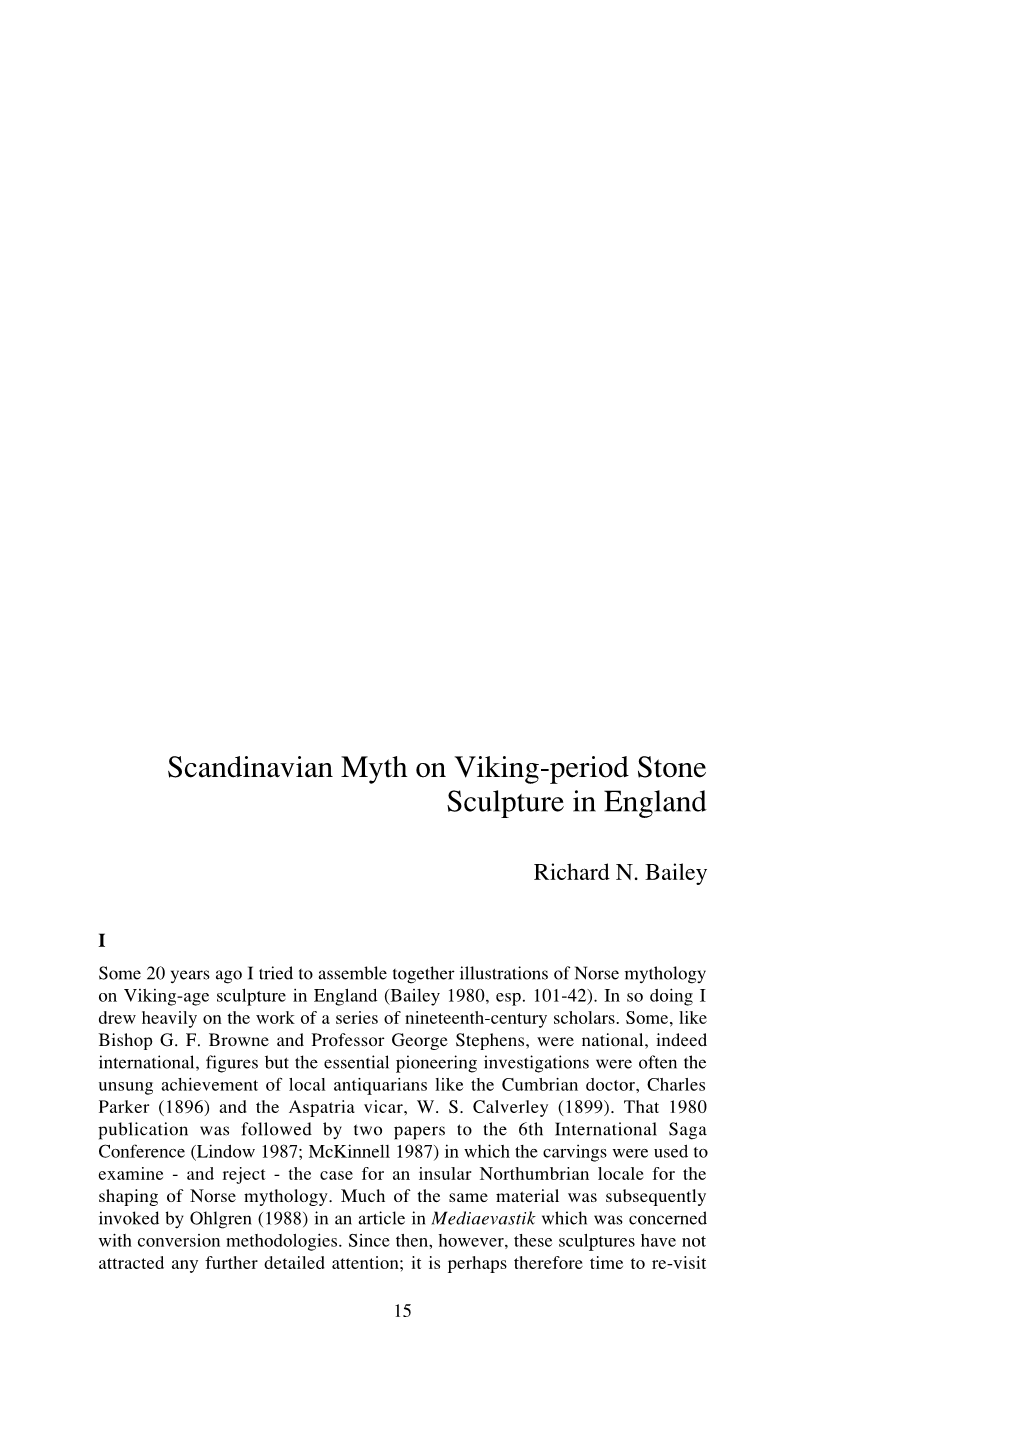 Scandinavian Myth on Viking-Period Stone Sculpture in England